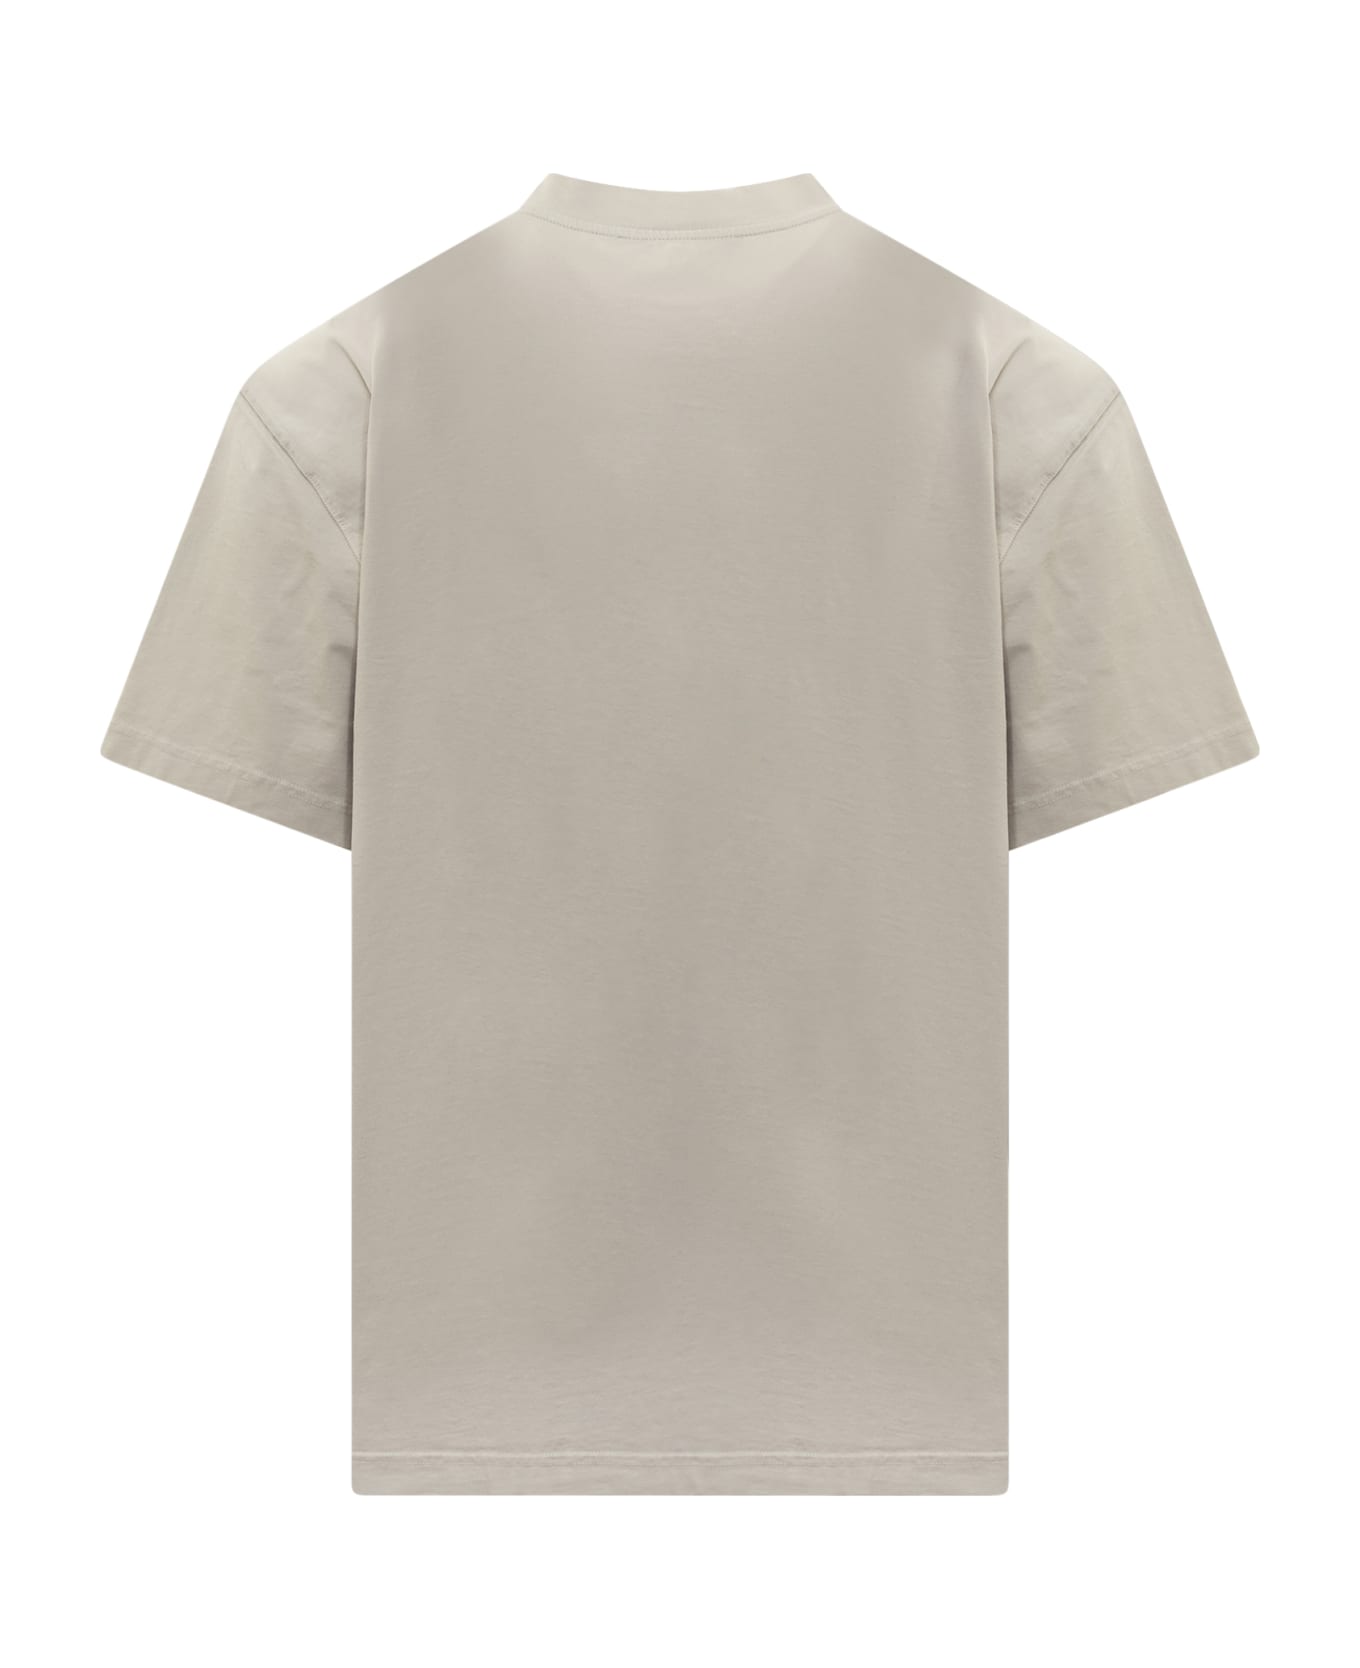 A-COLD-WALL Gradient T-shirt - LIGHT GREY